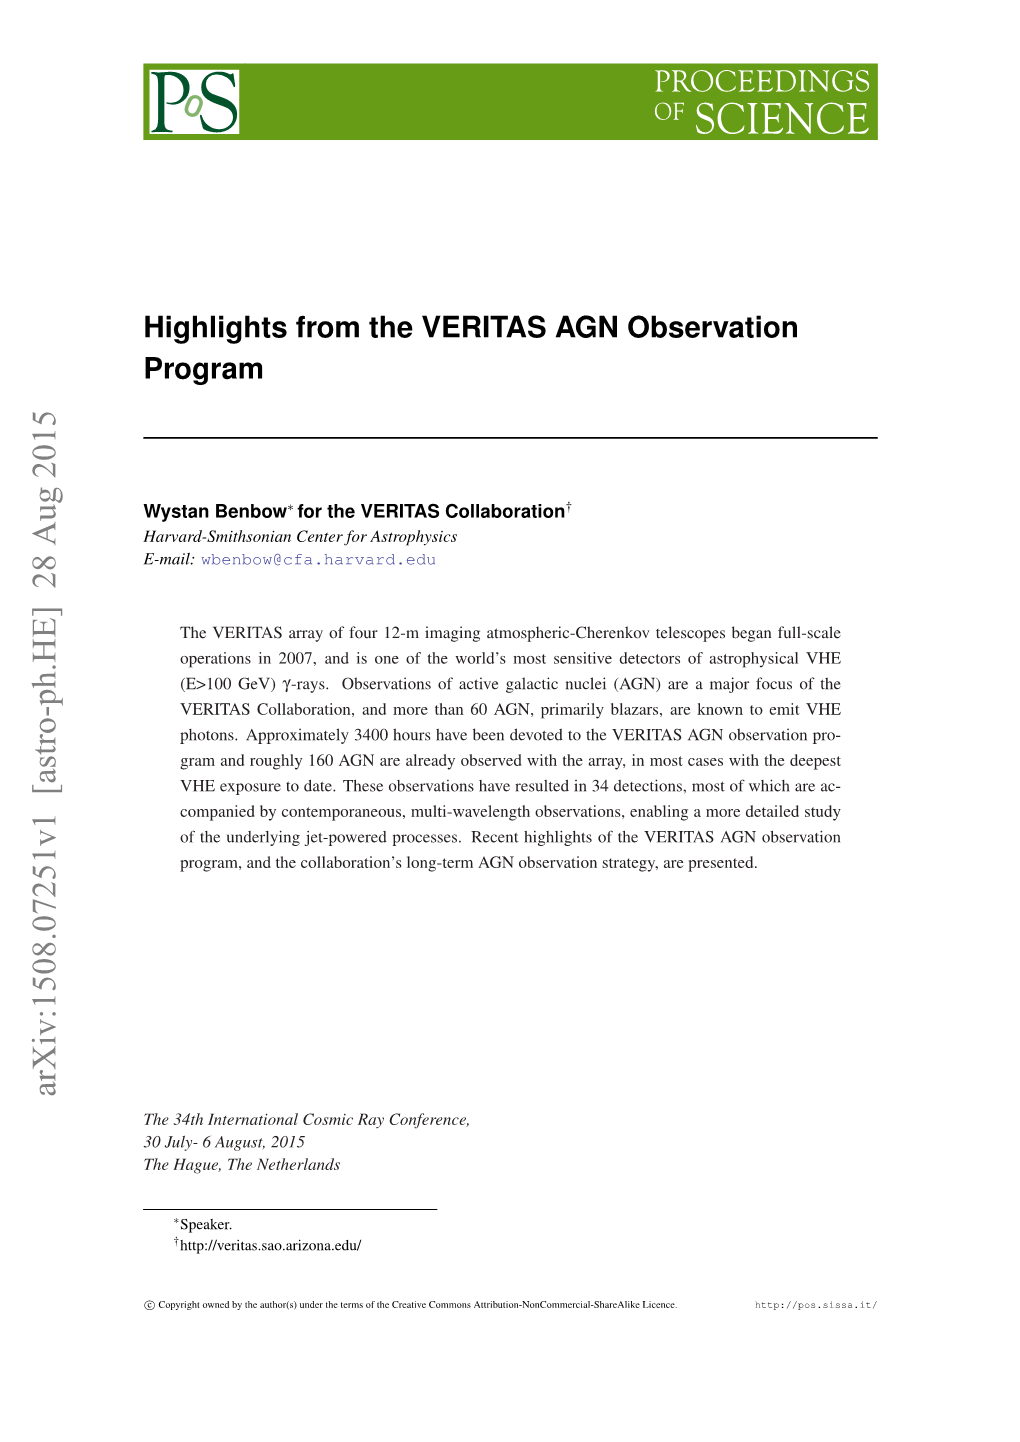 Highlights from the VERITAS AGN Observation Program